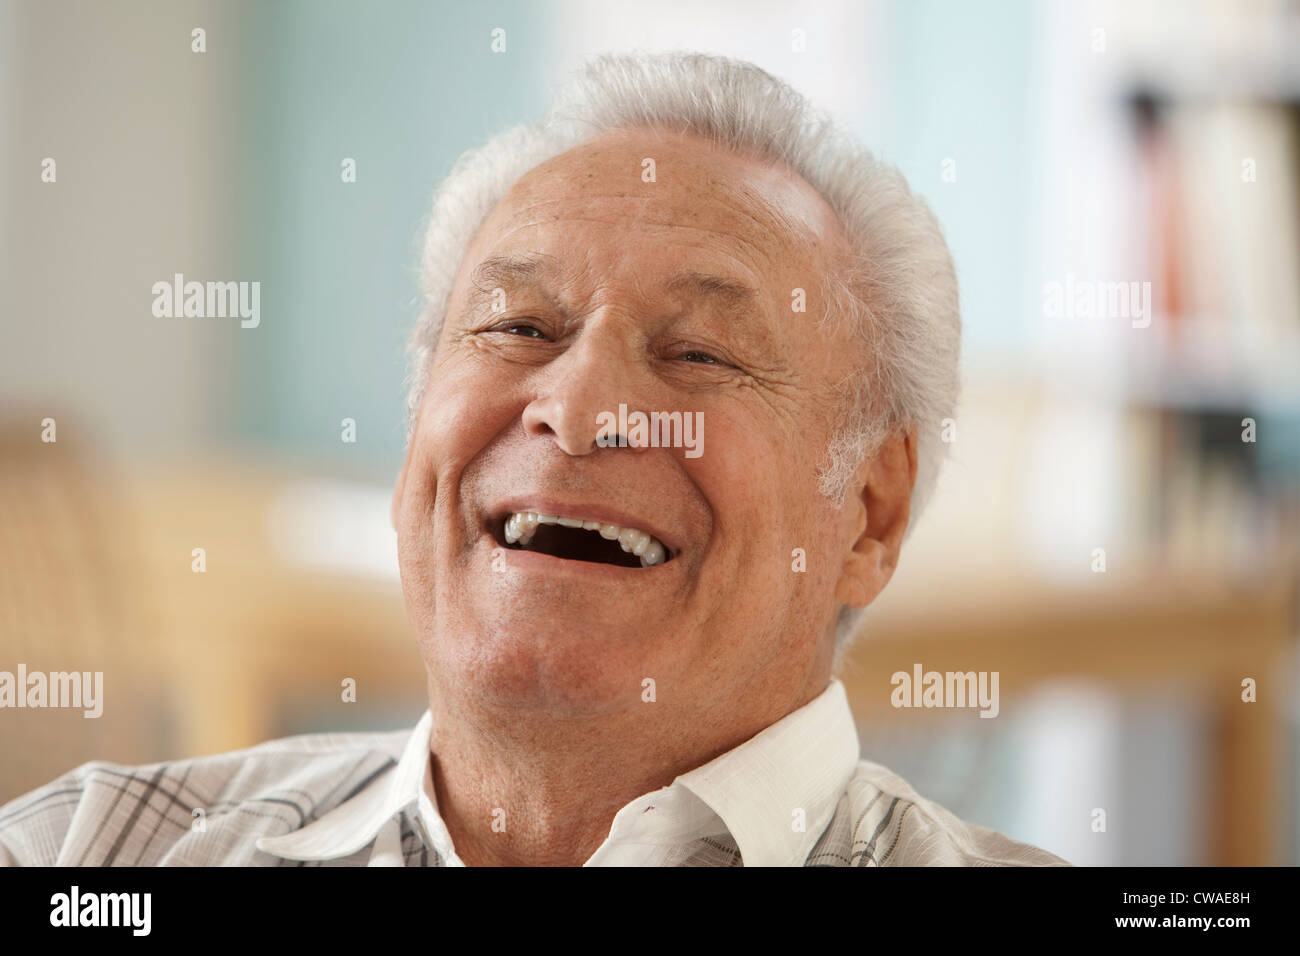 Senior man laughing, portrait Stock Photo